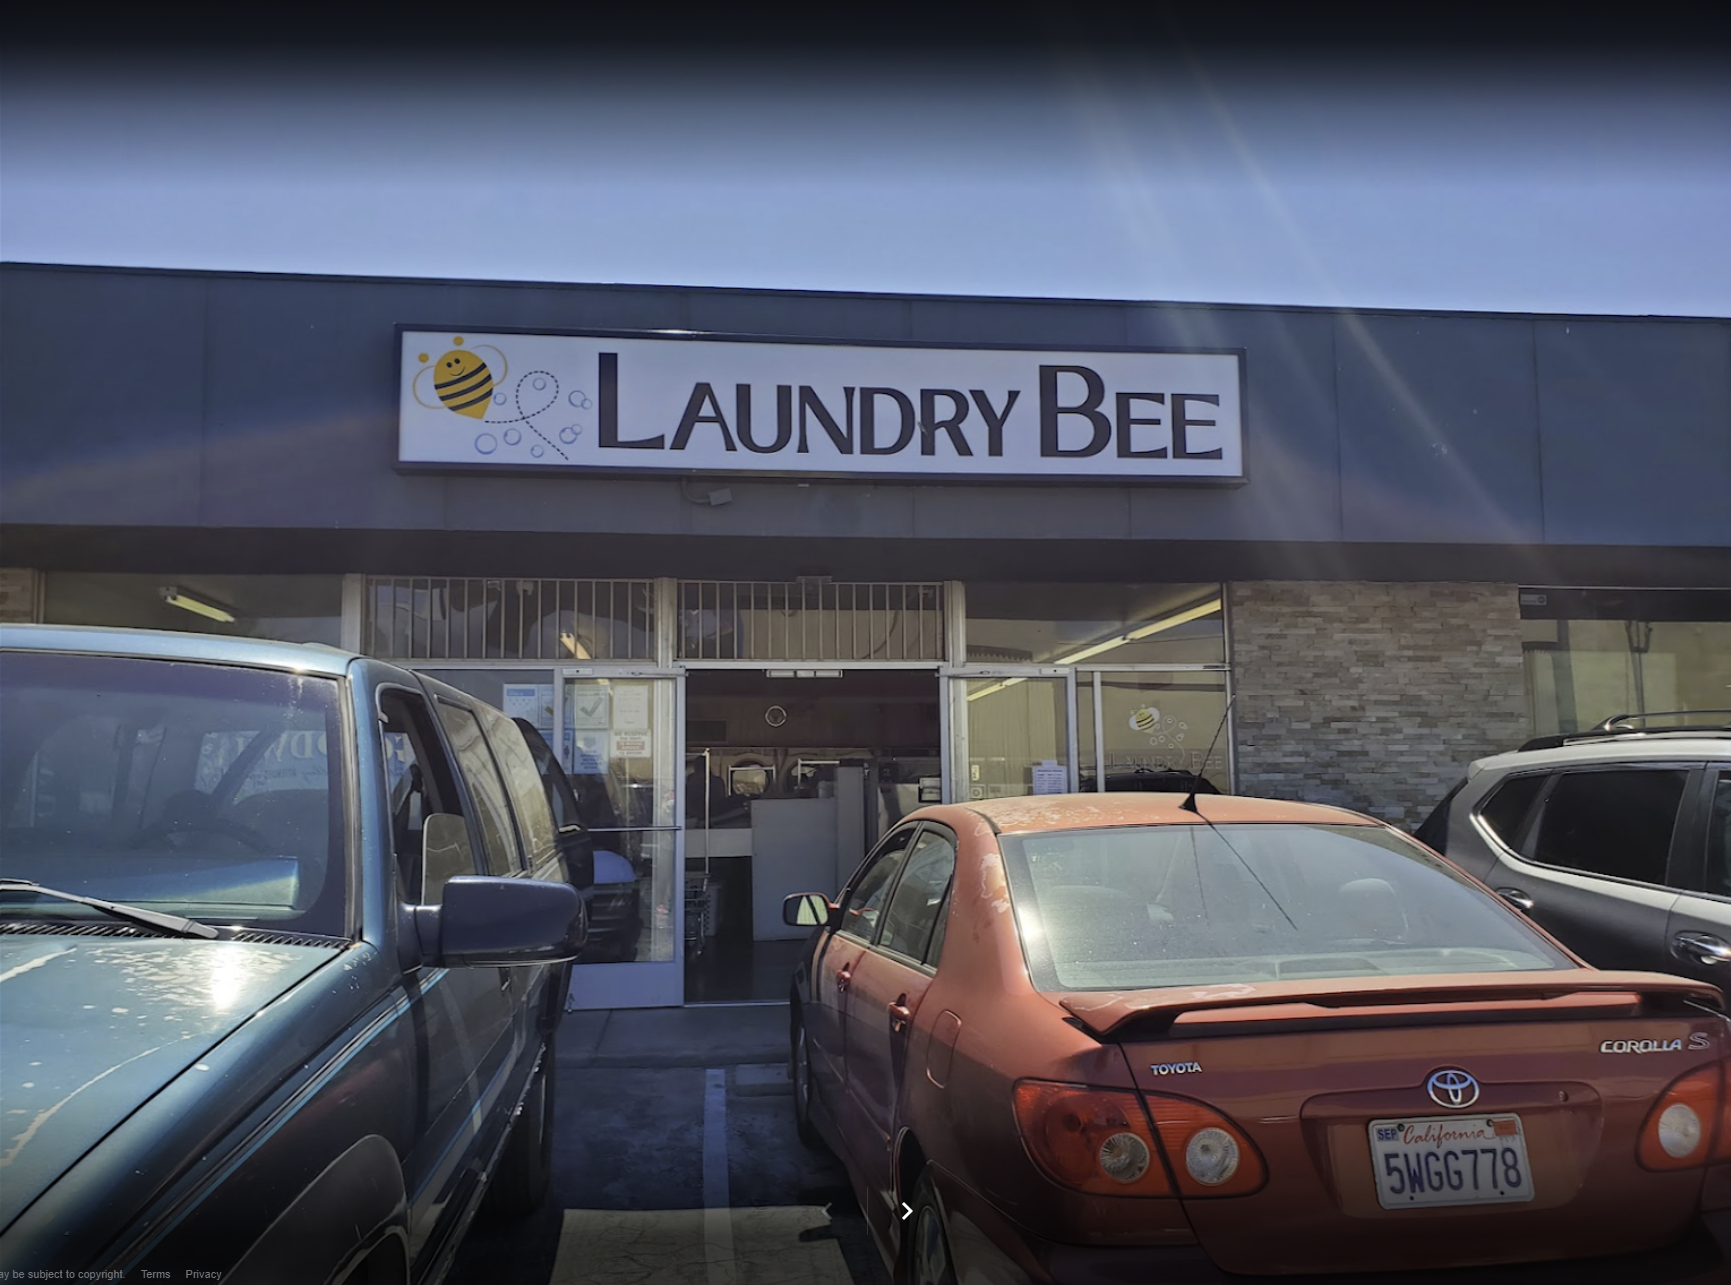 Laundry bee